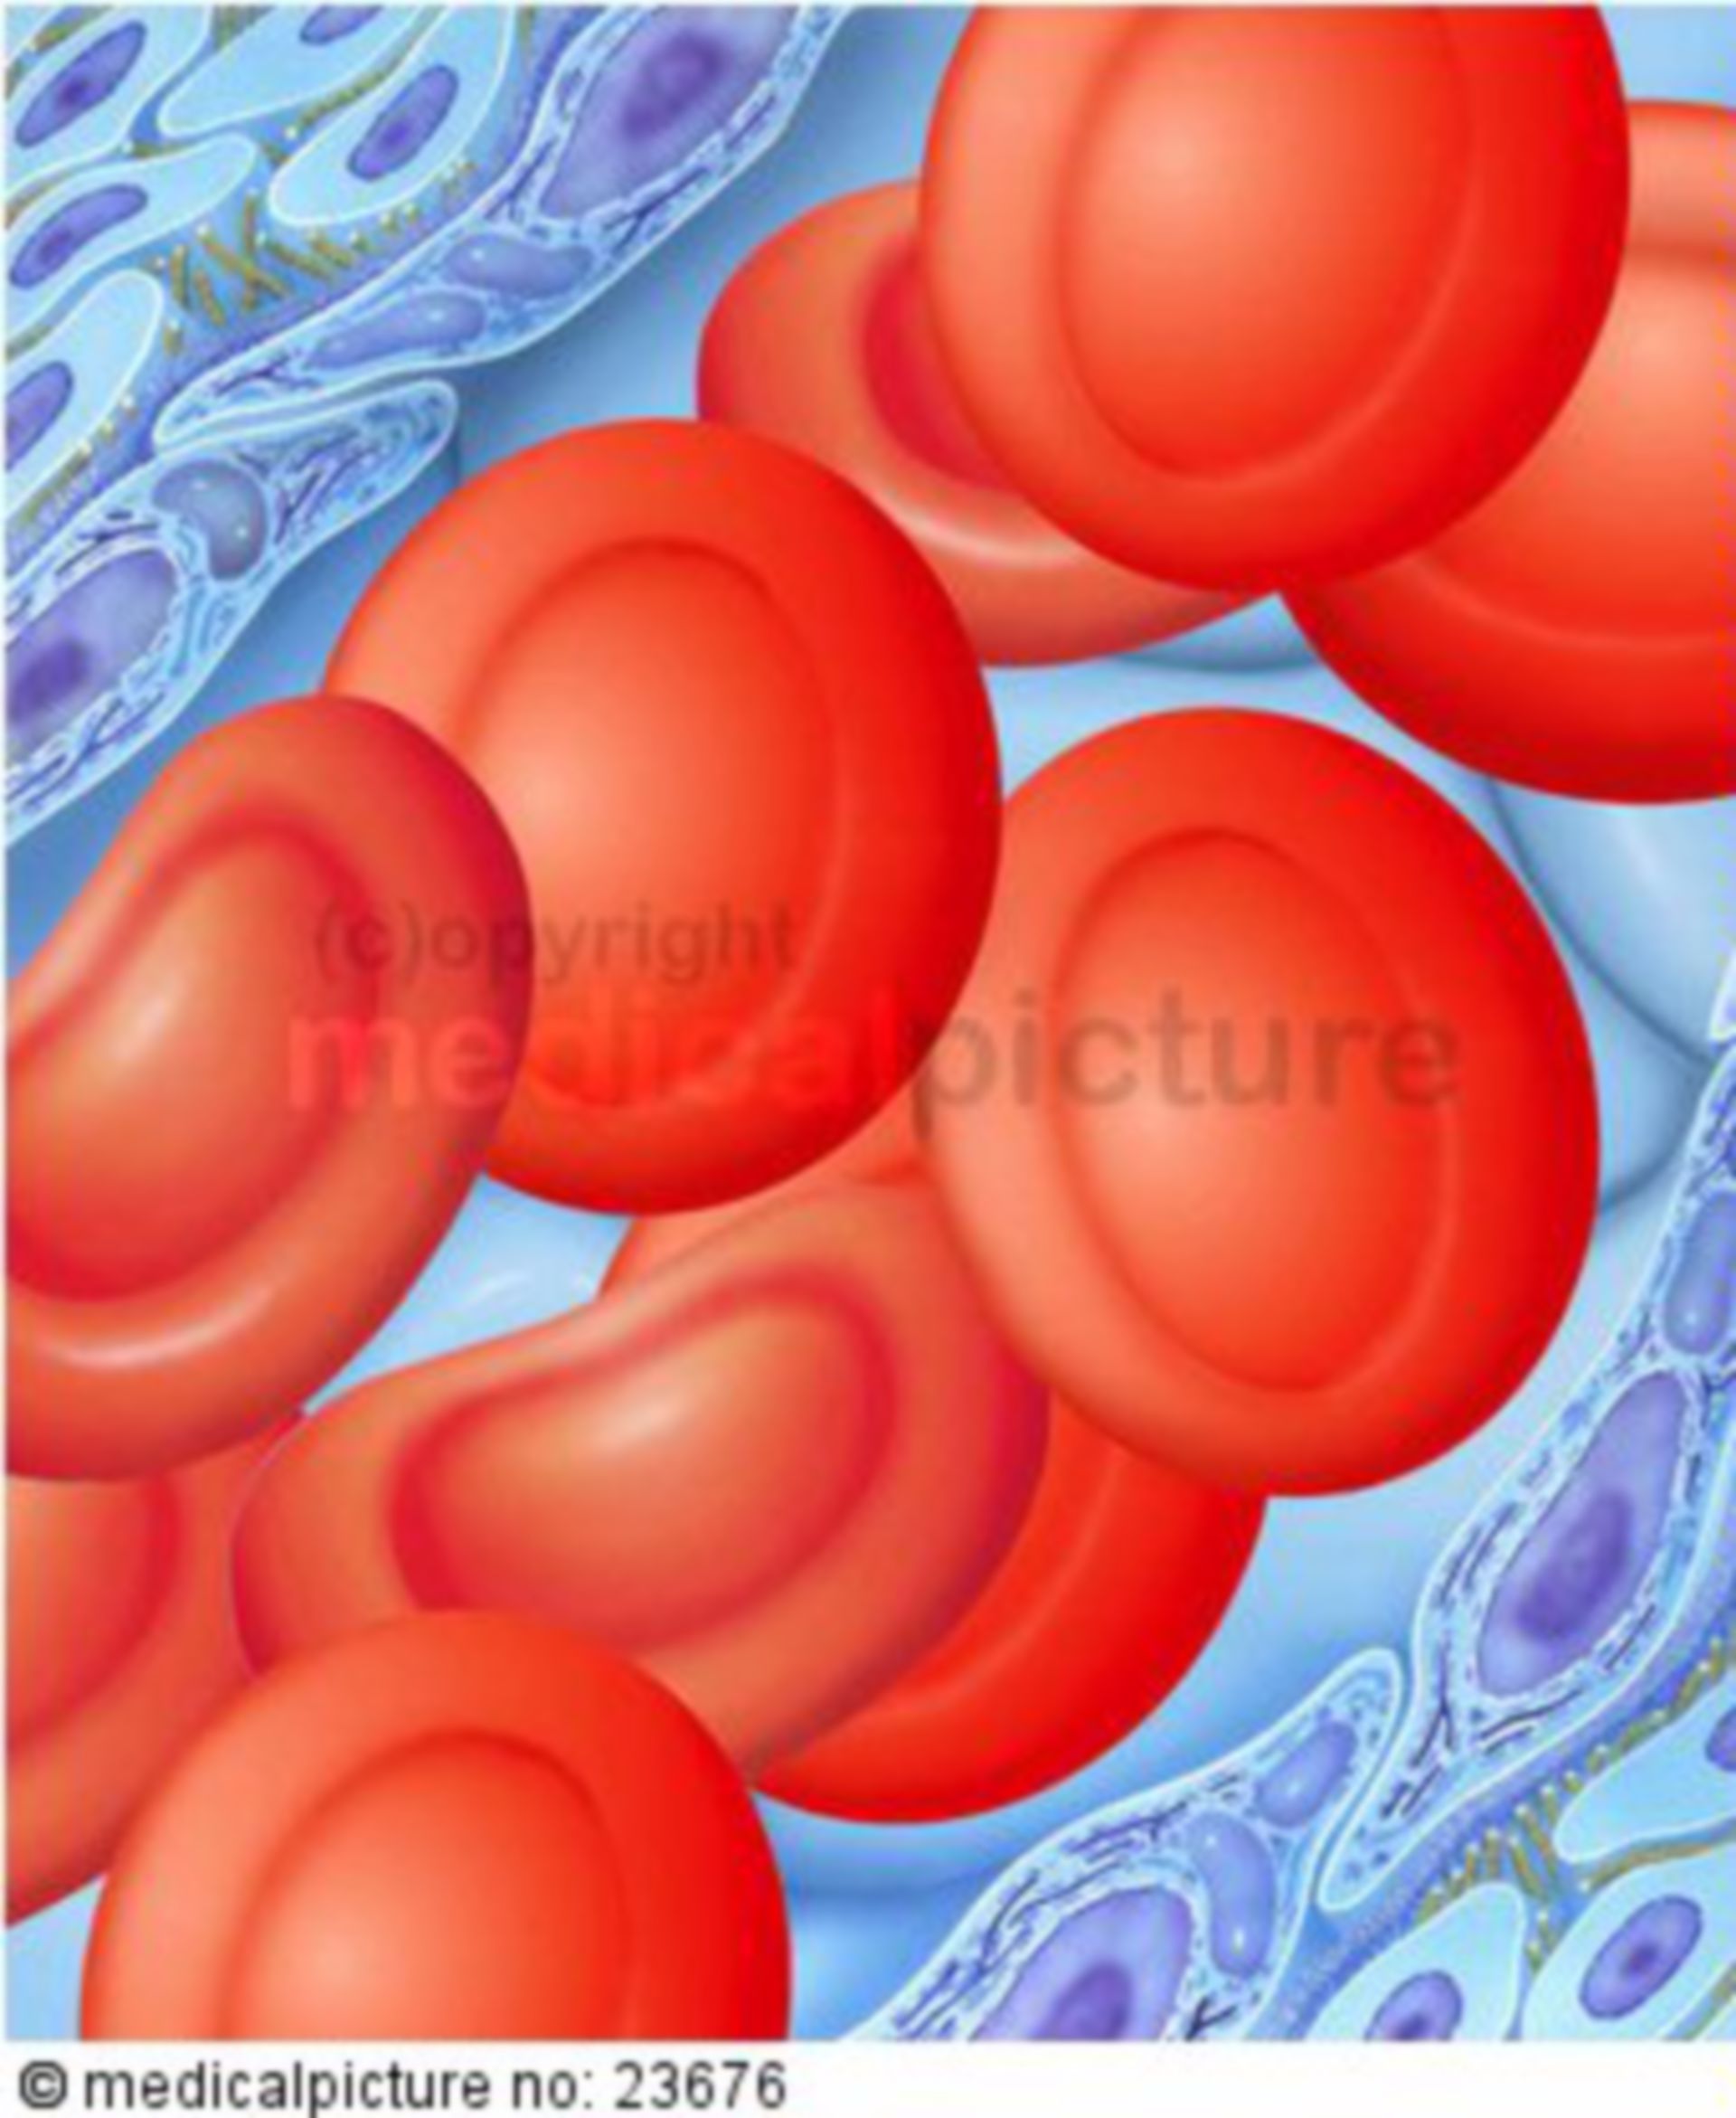 Red blood cells (erythrocytes)